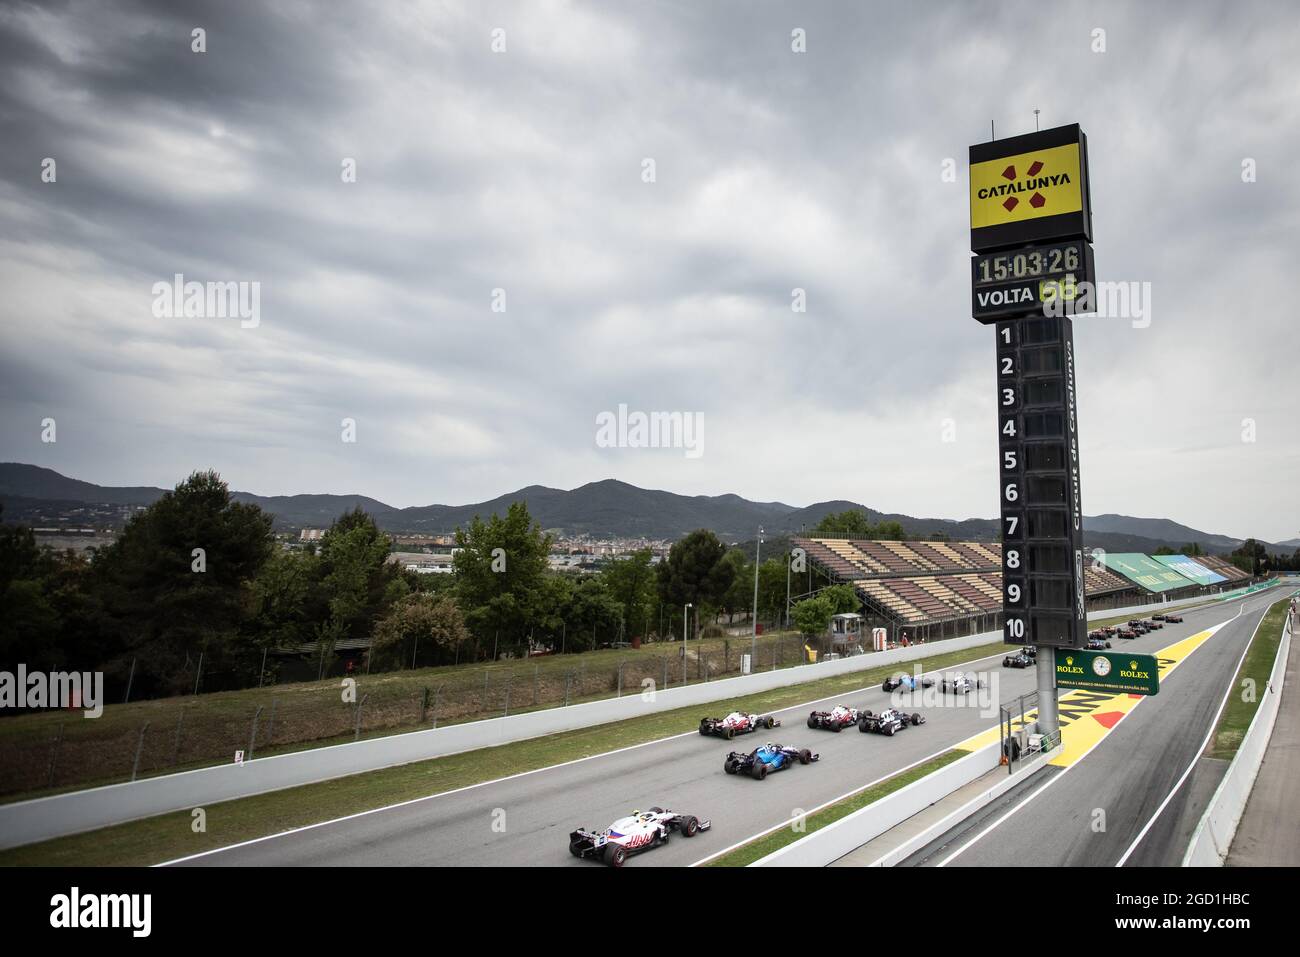 The start of the race. Spanish Grand Prix, Sunday 9th May 2021. Barcelona, Spain. Stock Photo